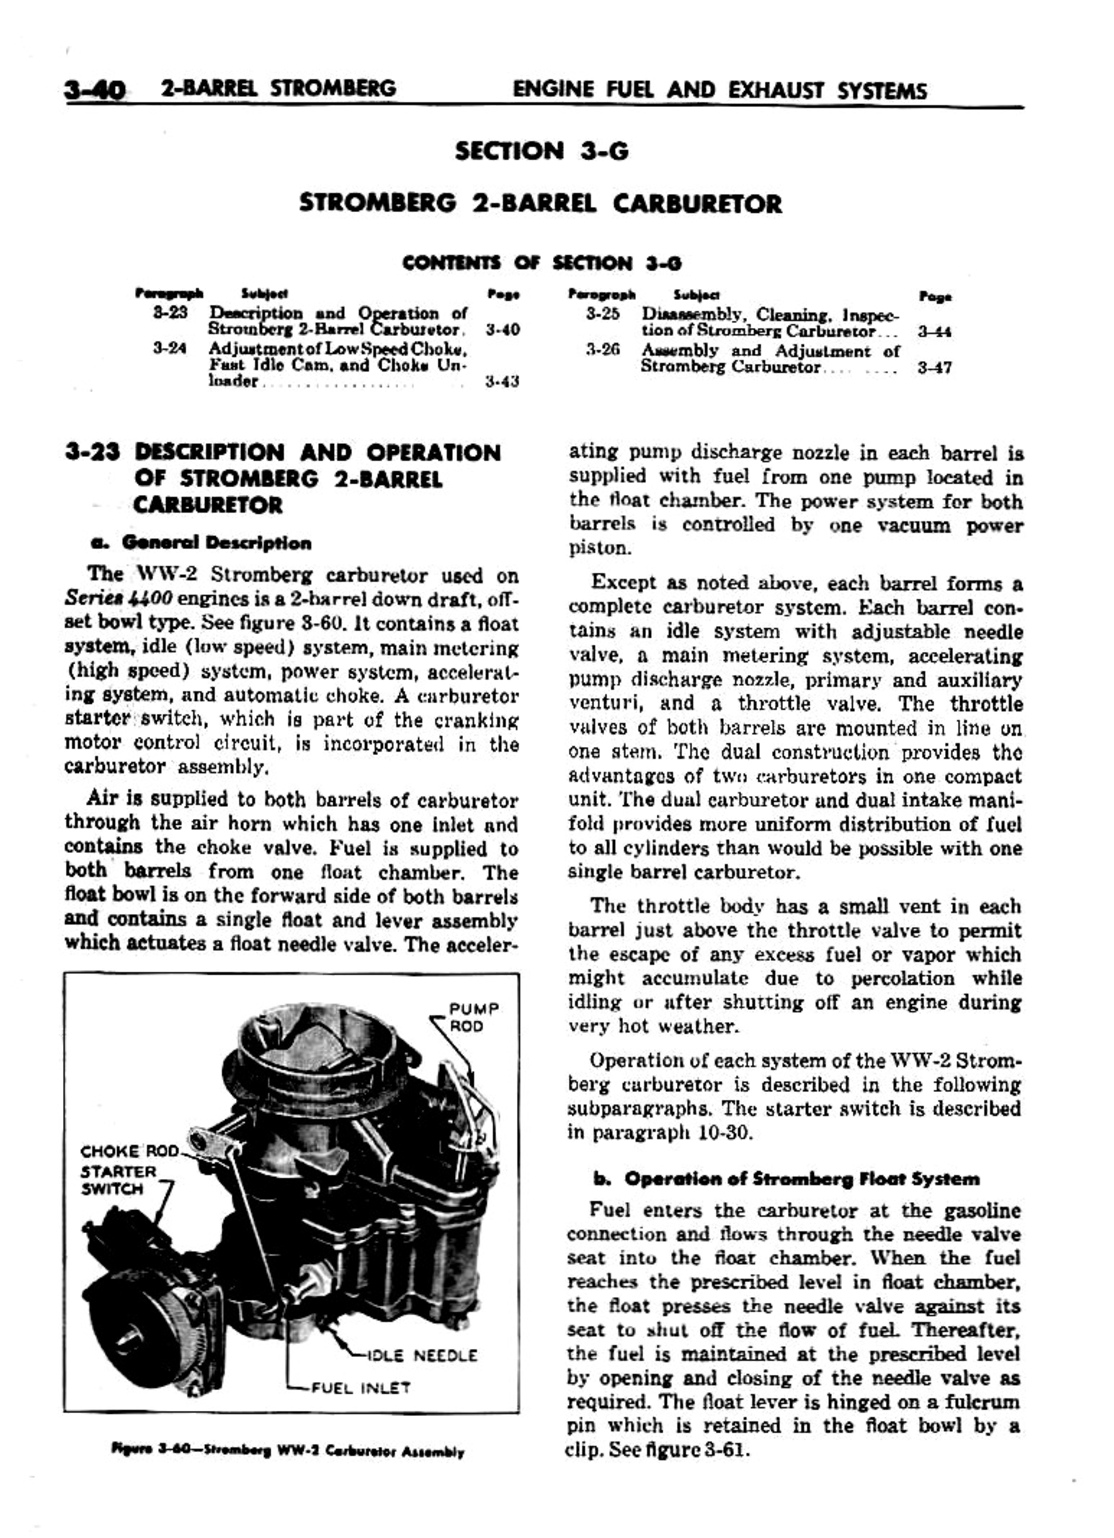 n_04 1959 Buick Shop Manual - Engine Fuel & Exhaust-040-040.jpg